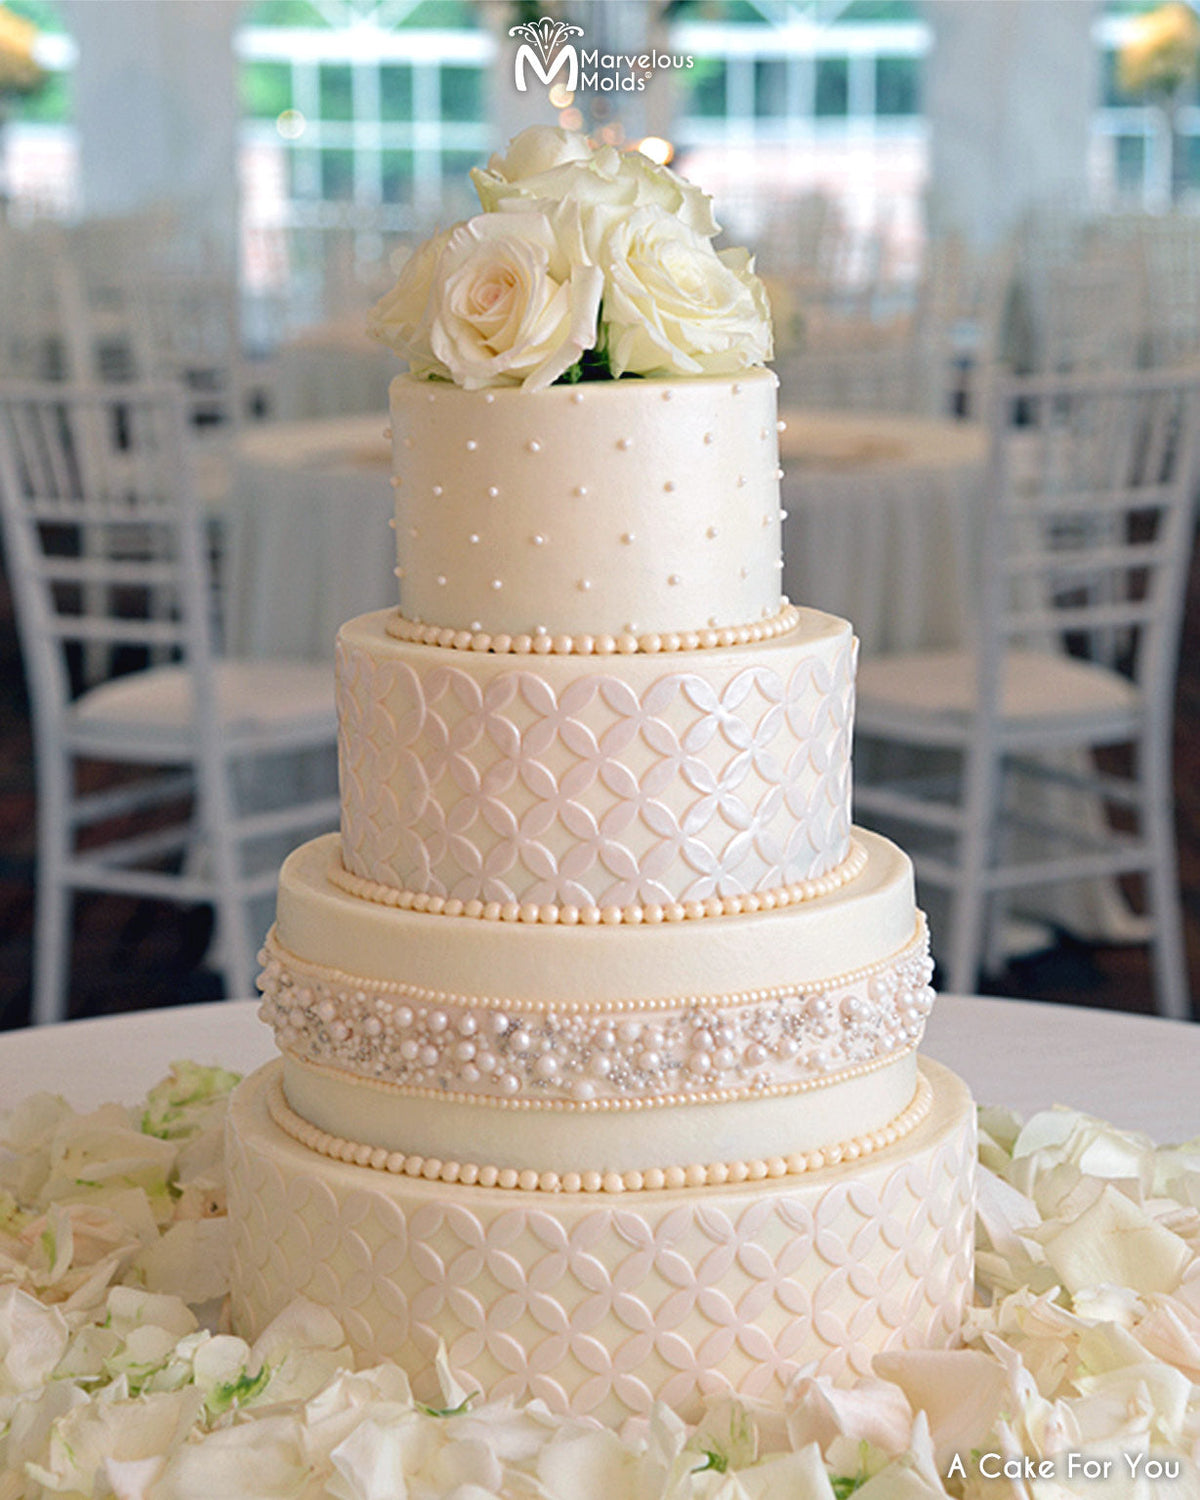 White Wedding Cake Decorated Using the Marvelous Molds Double Wedding Ring Silicone Onlay